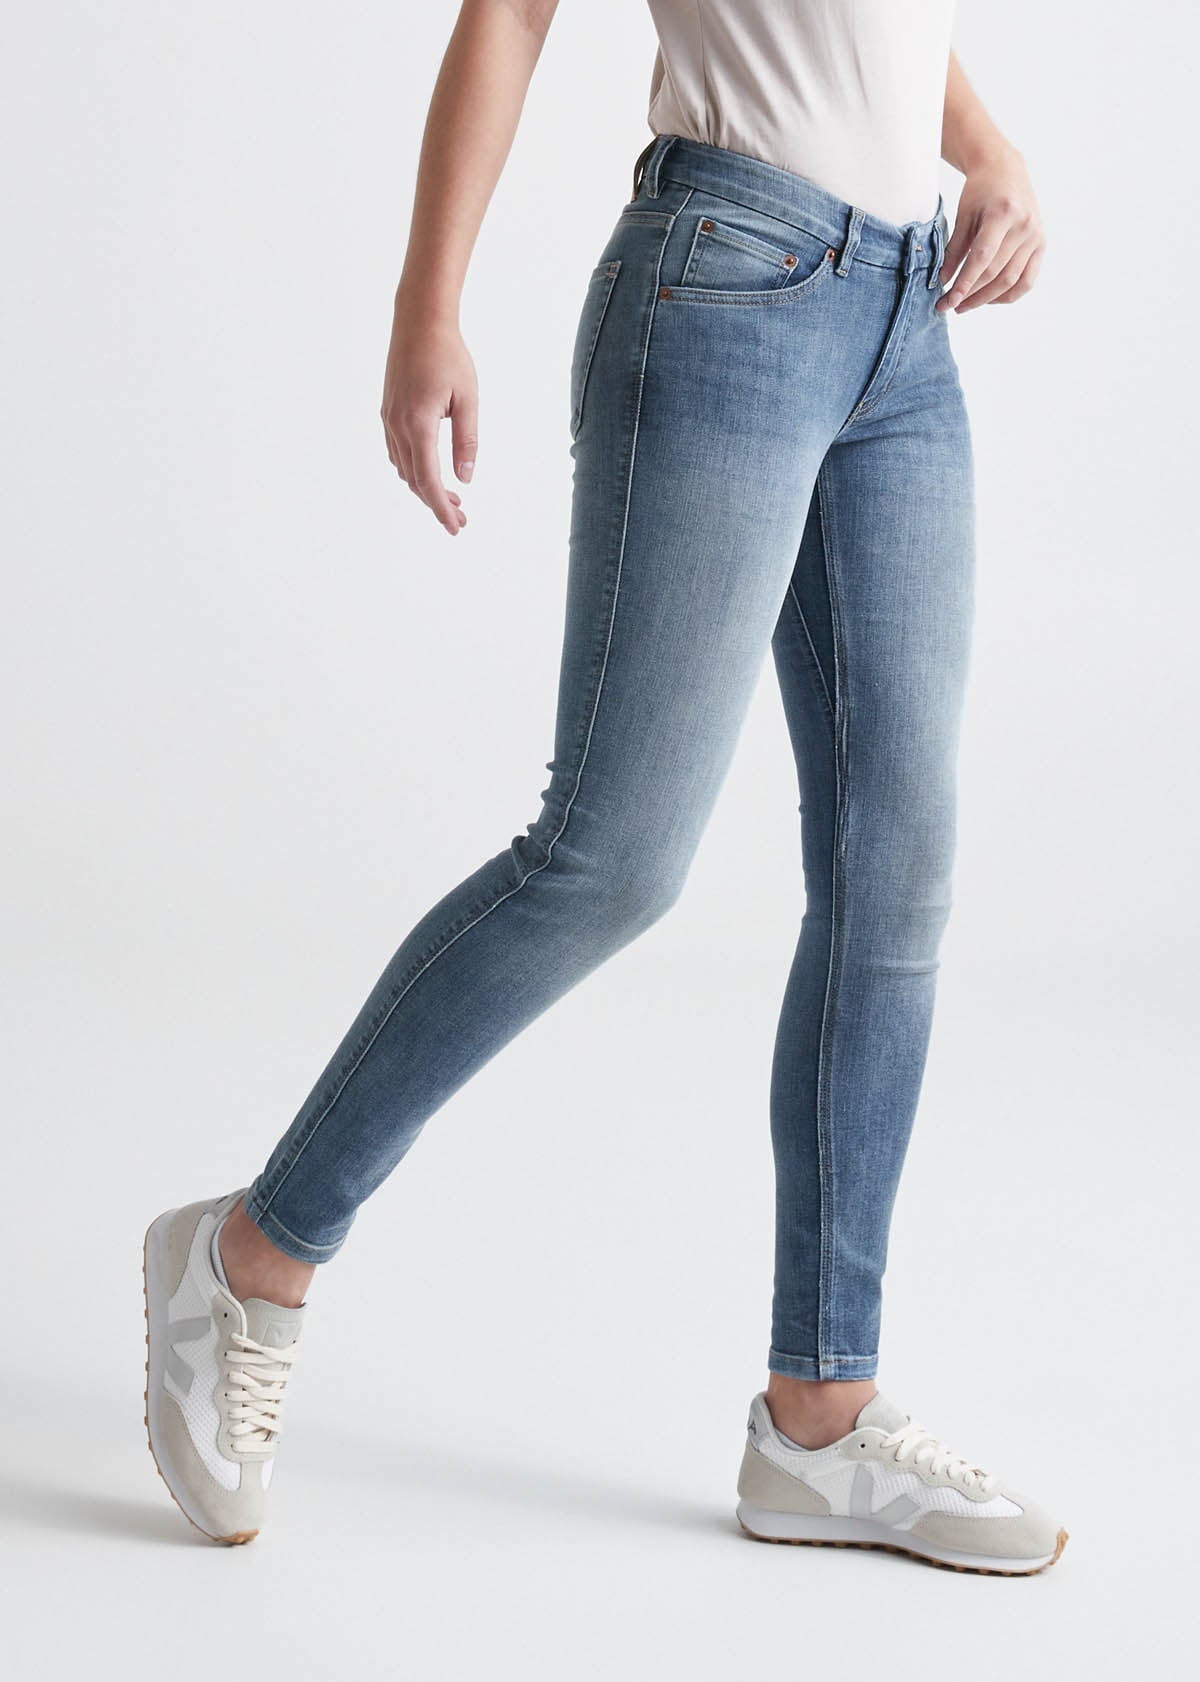 Women's Blue Jeans, Ladies Blue Skinny & Slim Fit Jeans